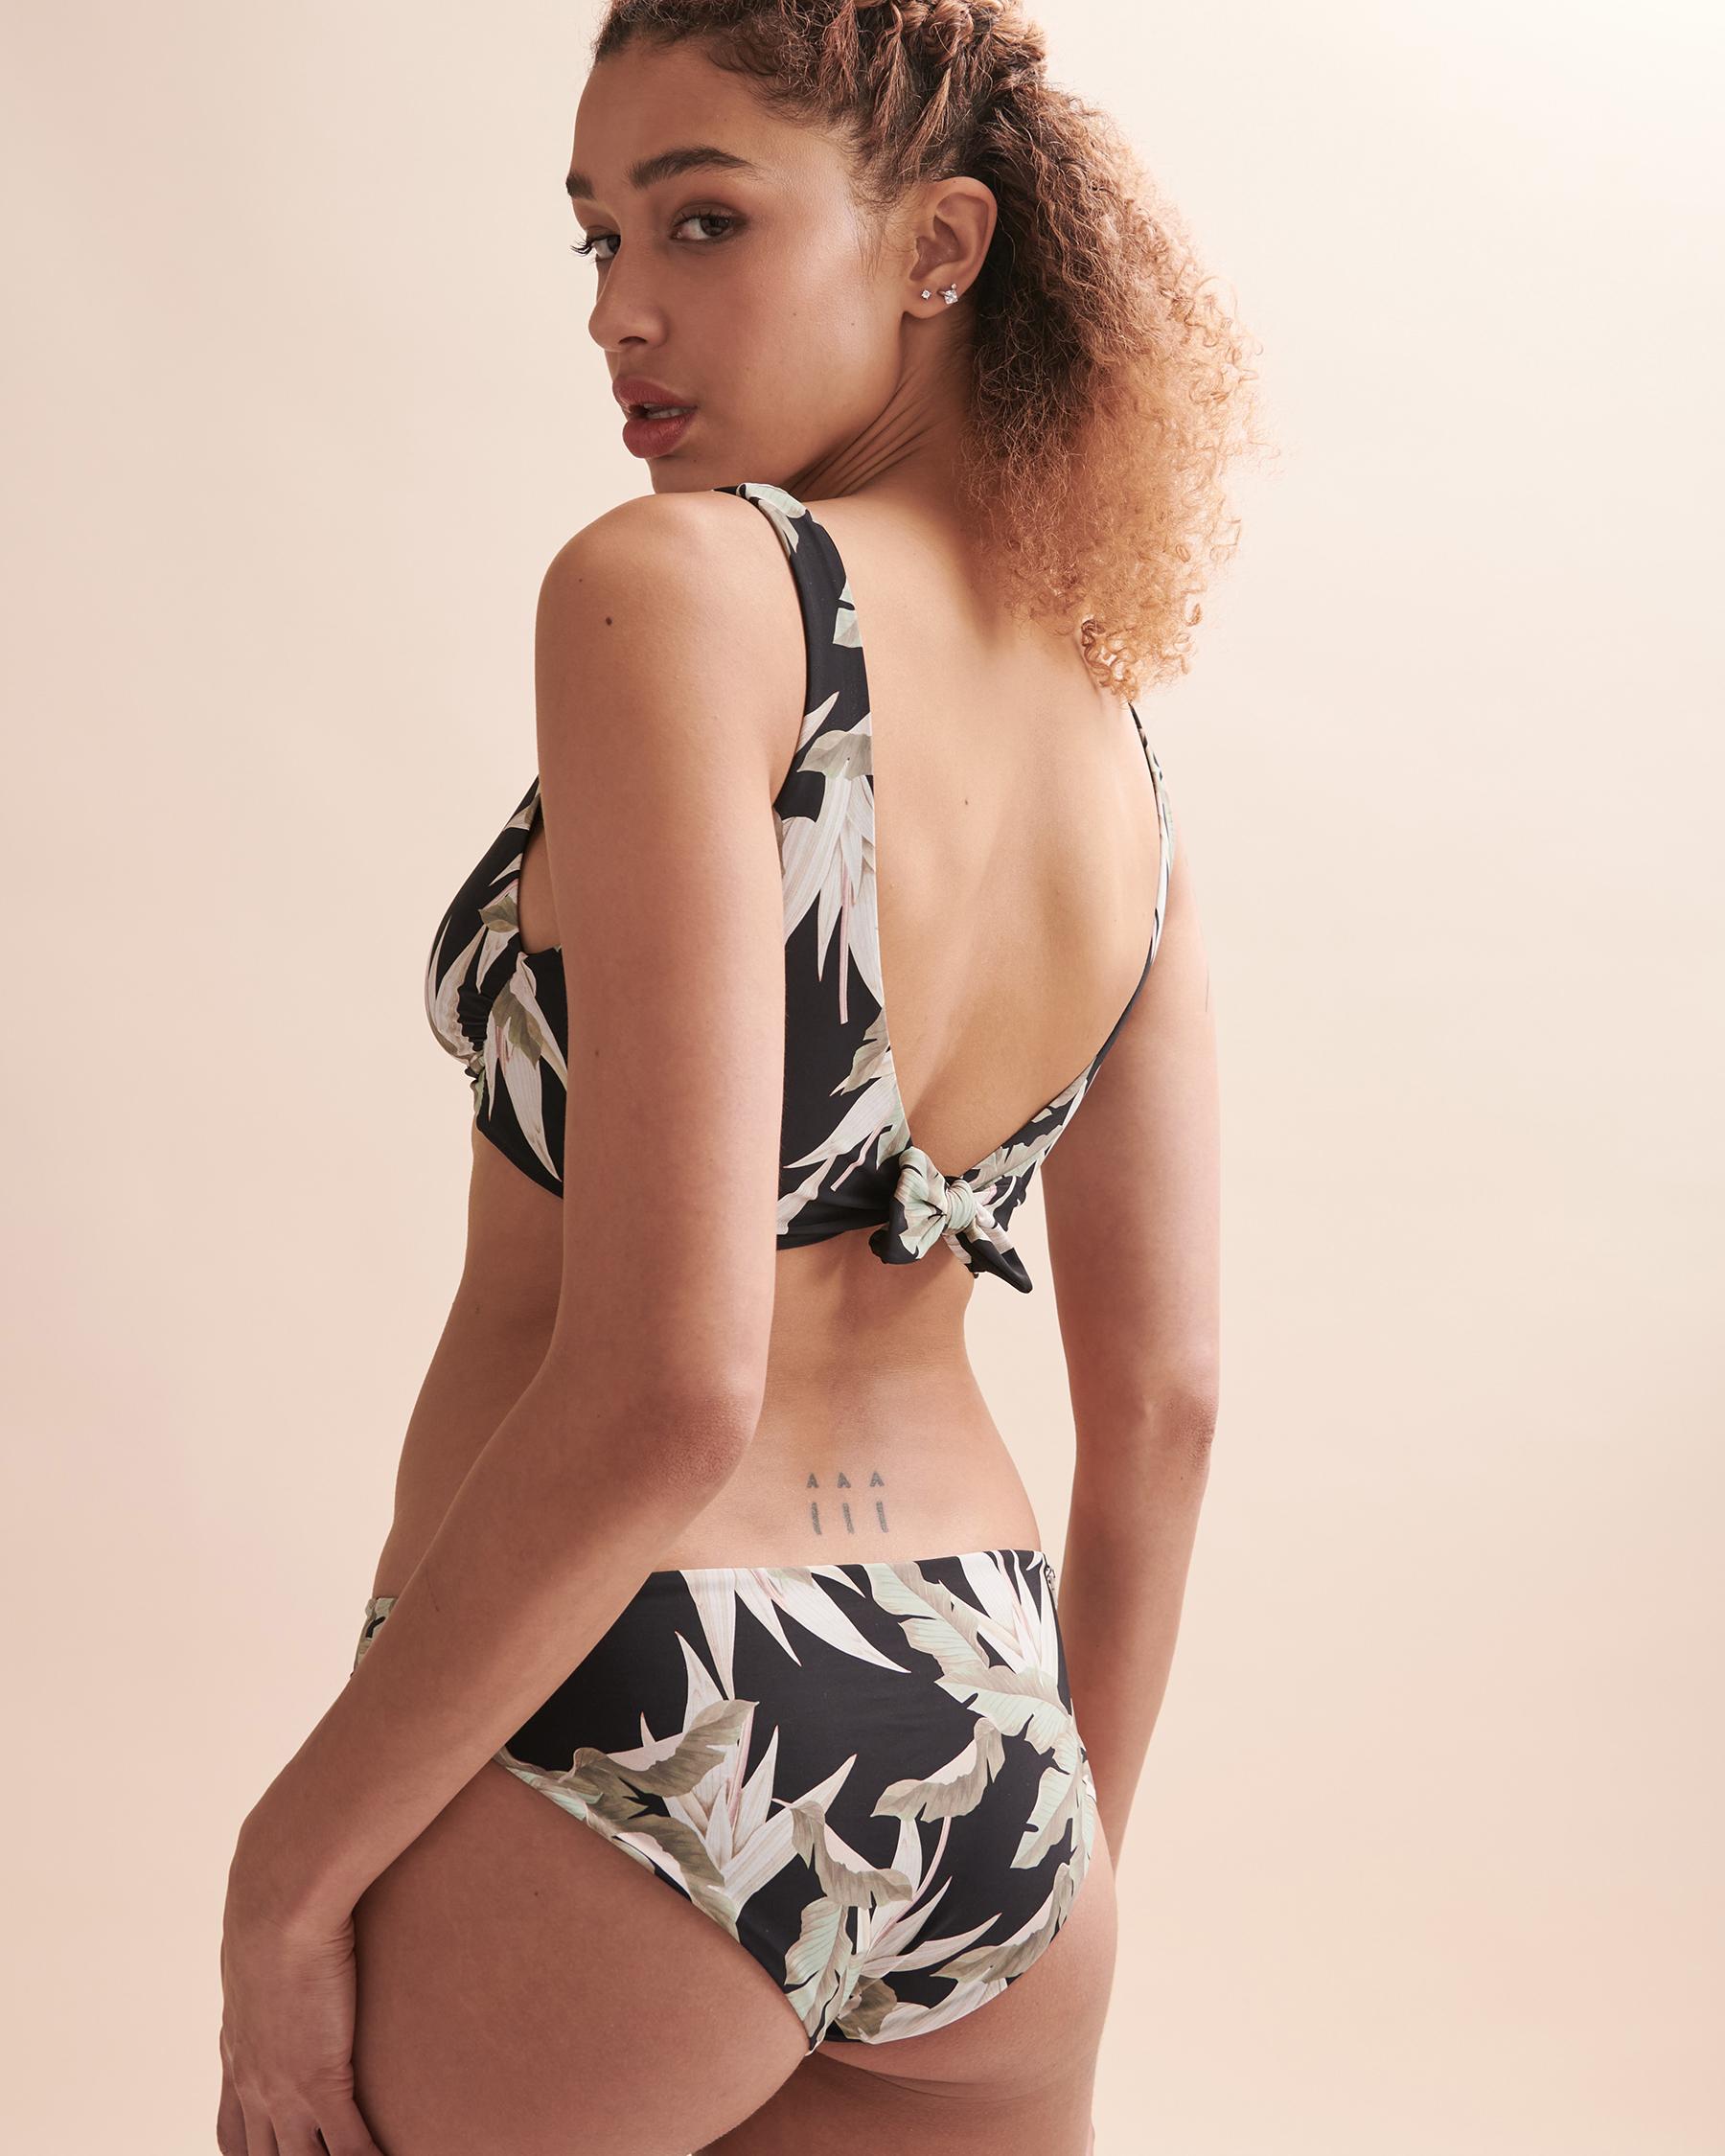 MALAI Perwinkle Reversible Twisted Bikini Top Tropical T26153 - View9